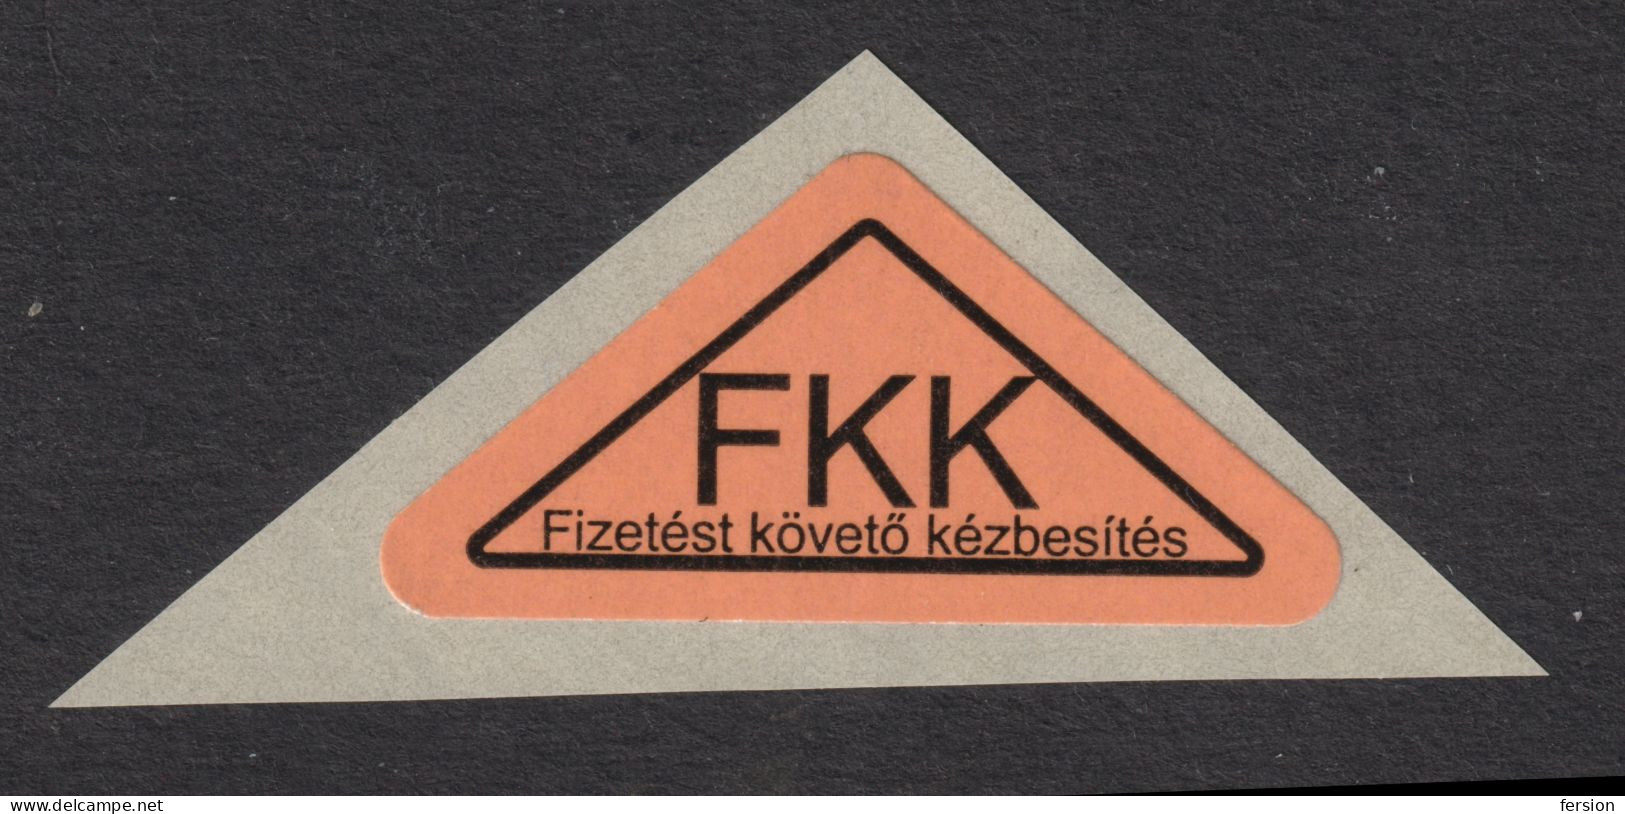 Postal LABEL - Delivery After Payment " Remboursement " FKK - Self Adhesive Vignette Label - 2020 Hungary - MNH - Vignette [ATM]